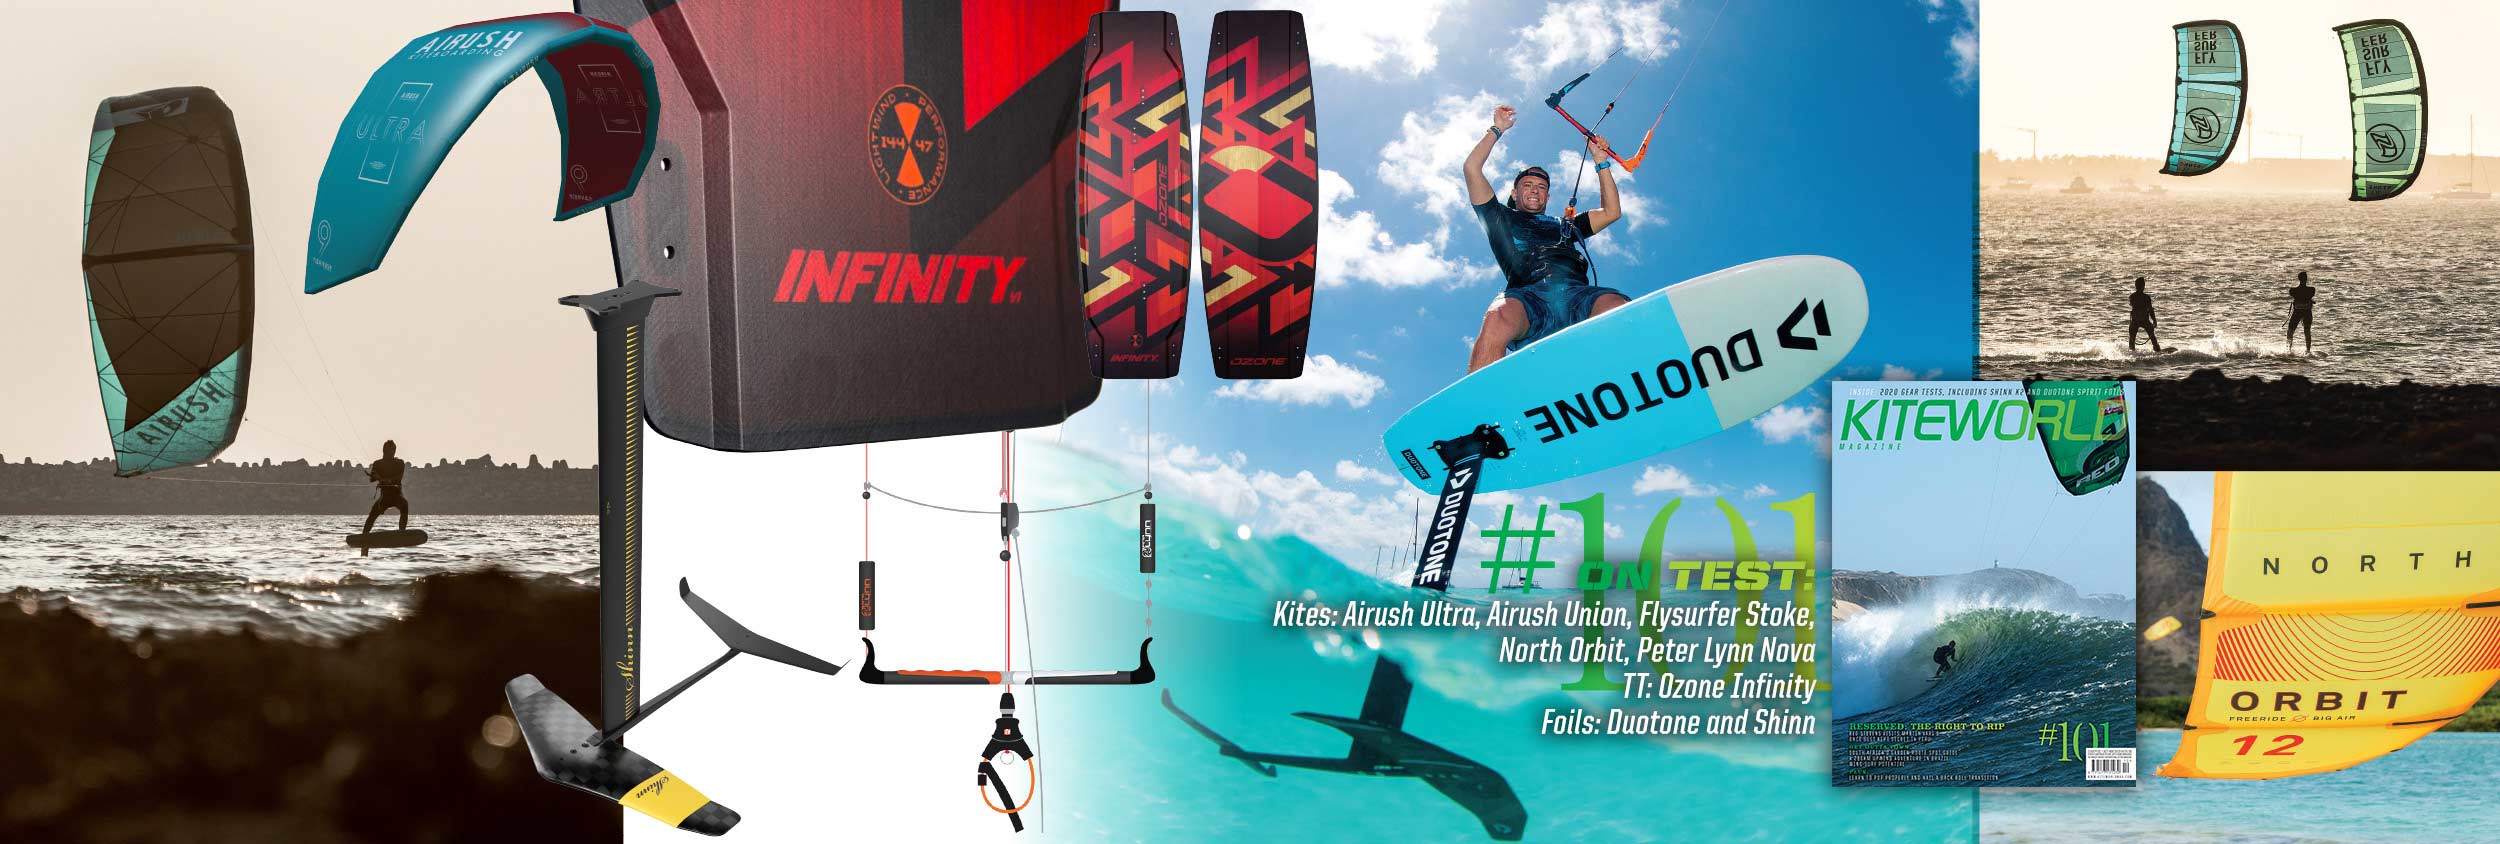 Kiteworld kitesurfing magazine new issue 101